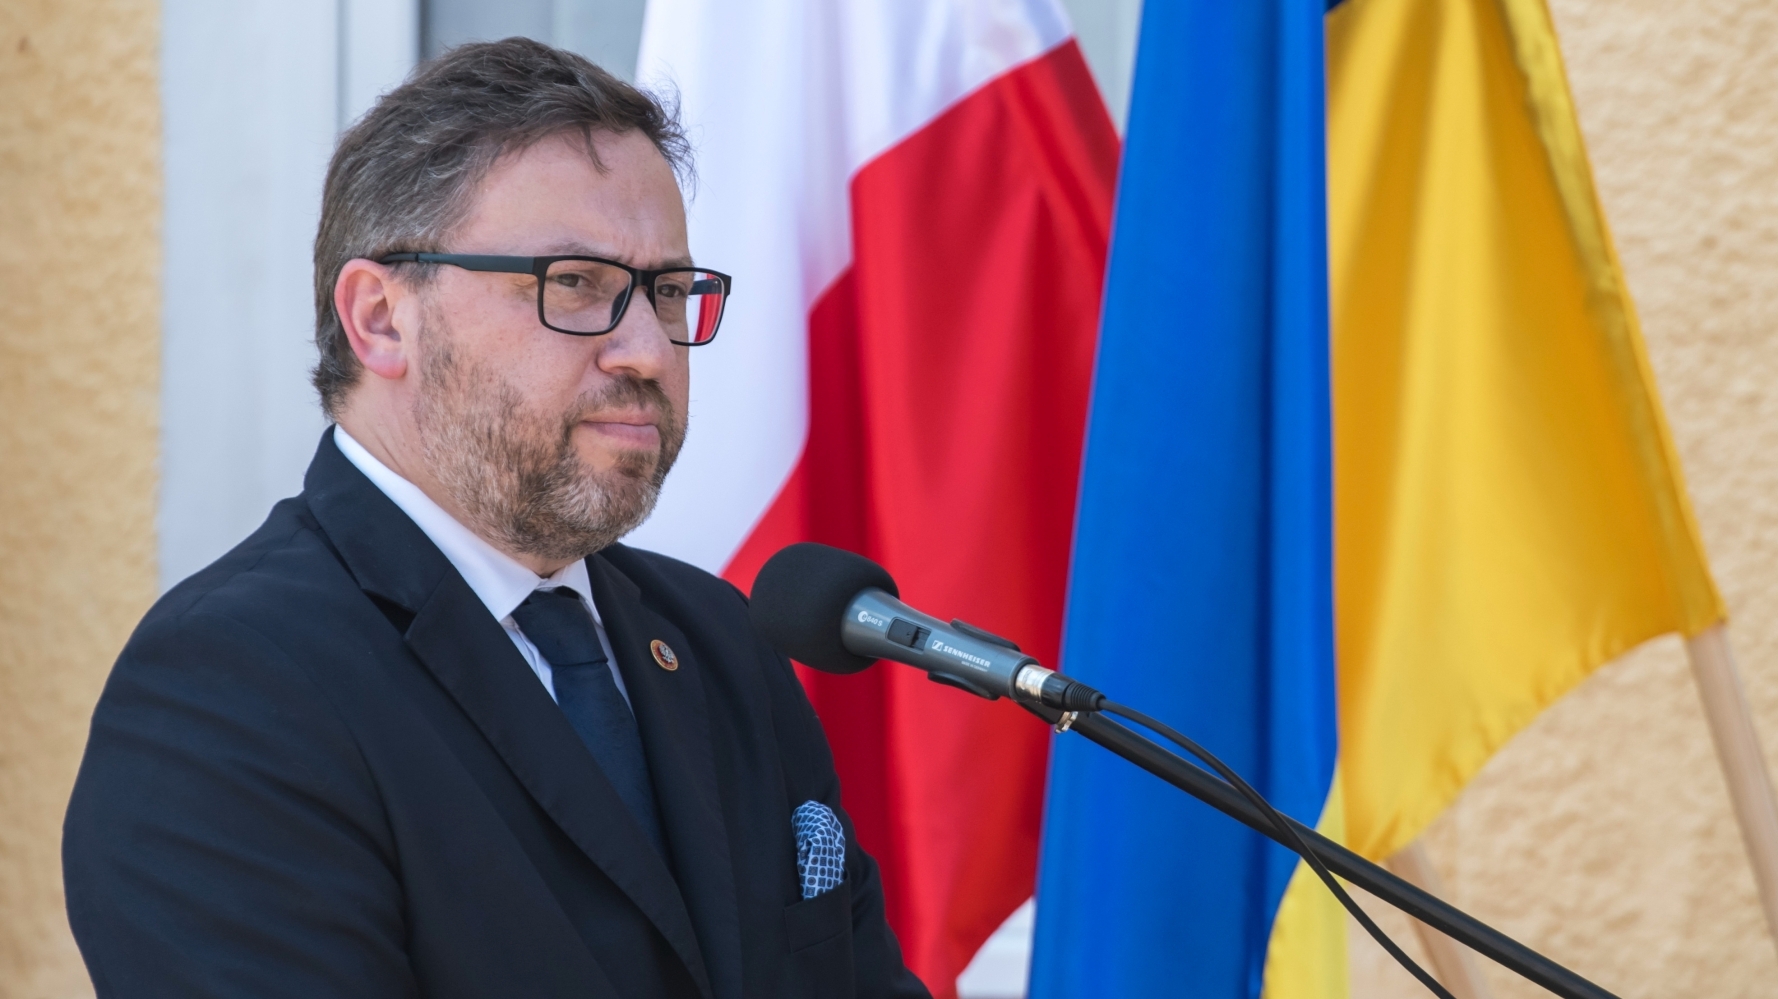 The Ukrainian Ministry of Foreign Affairs summoned the Polish ambassador